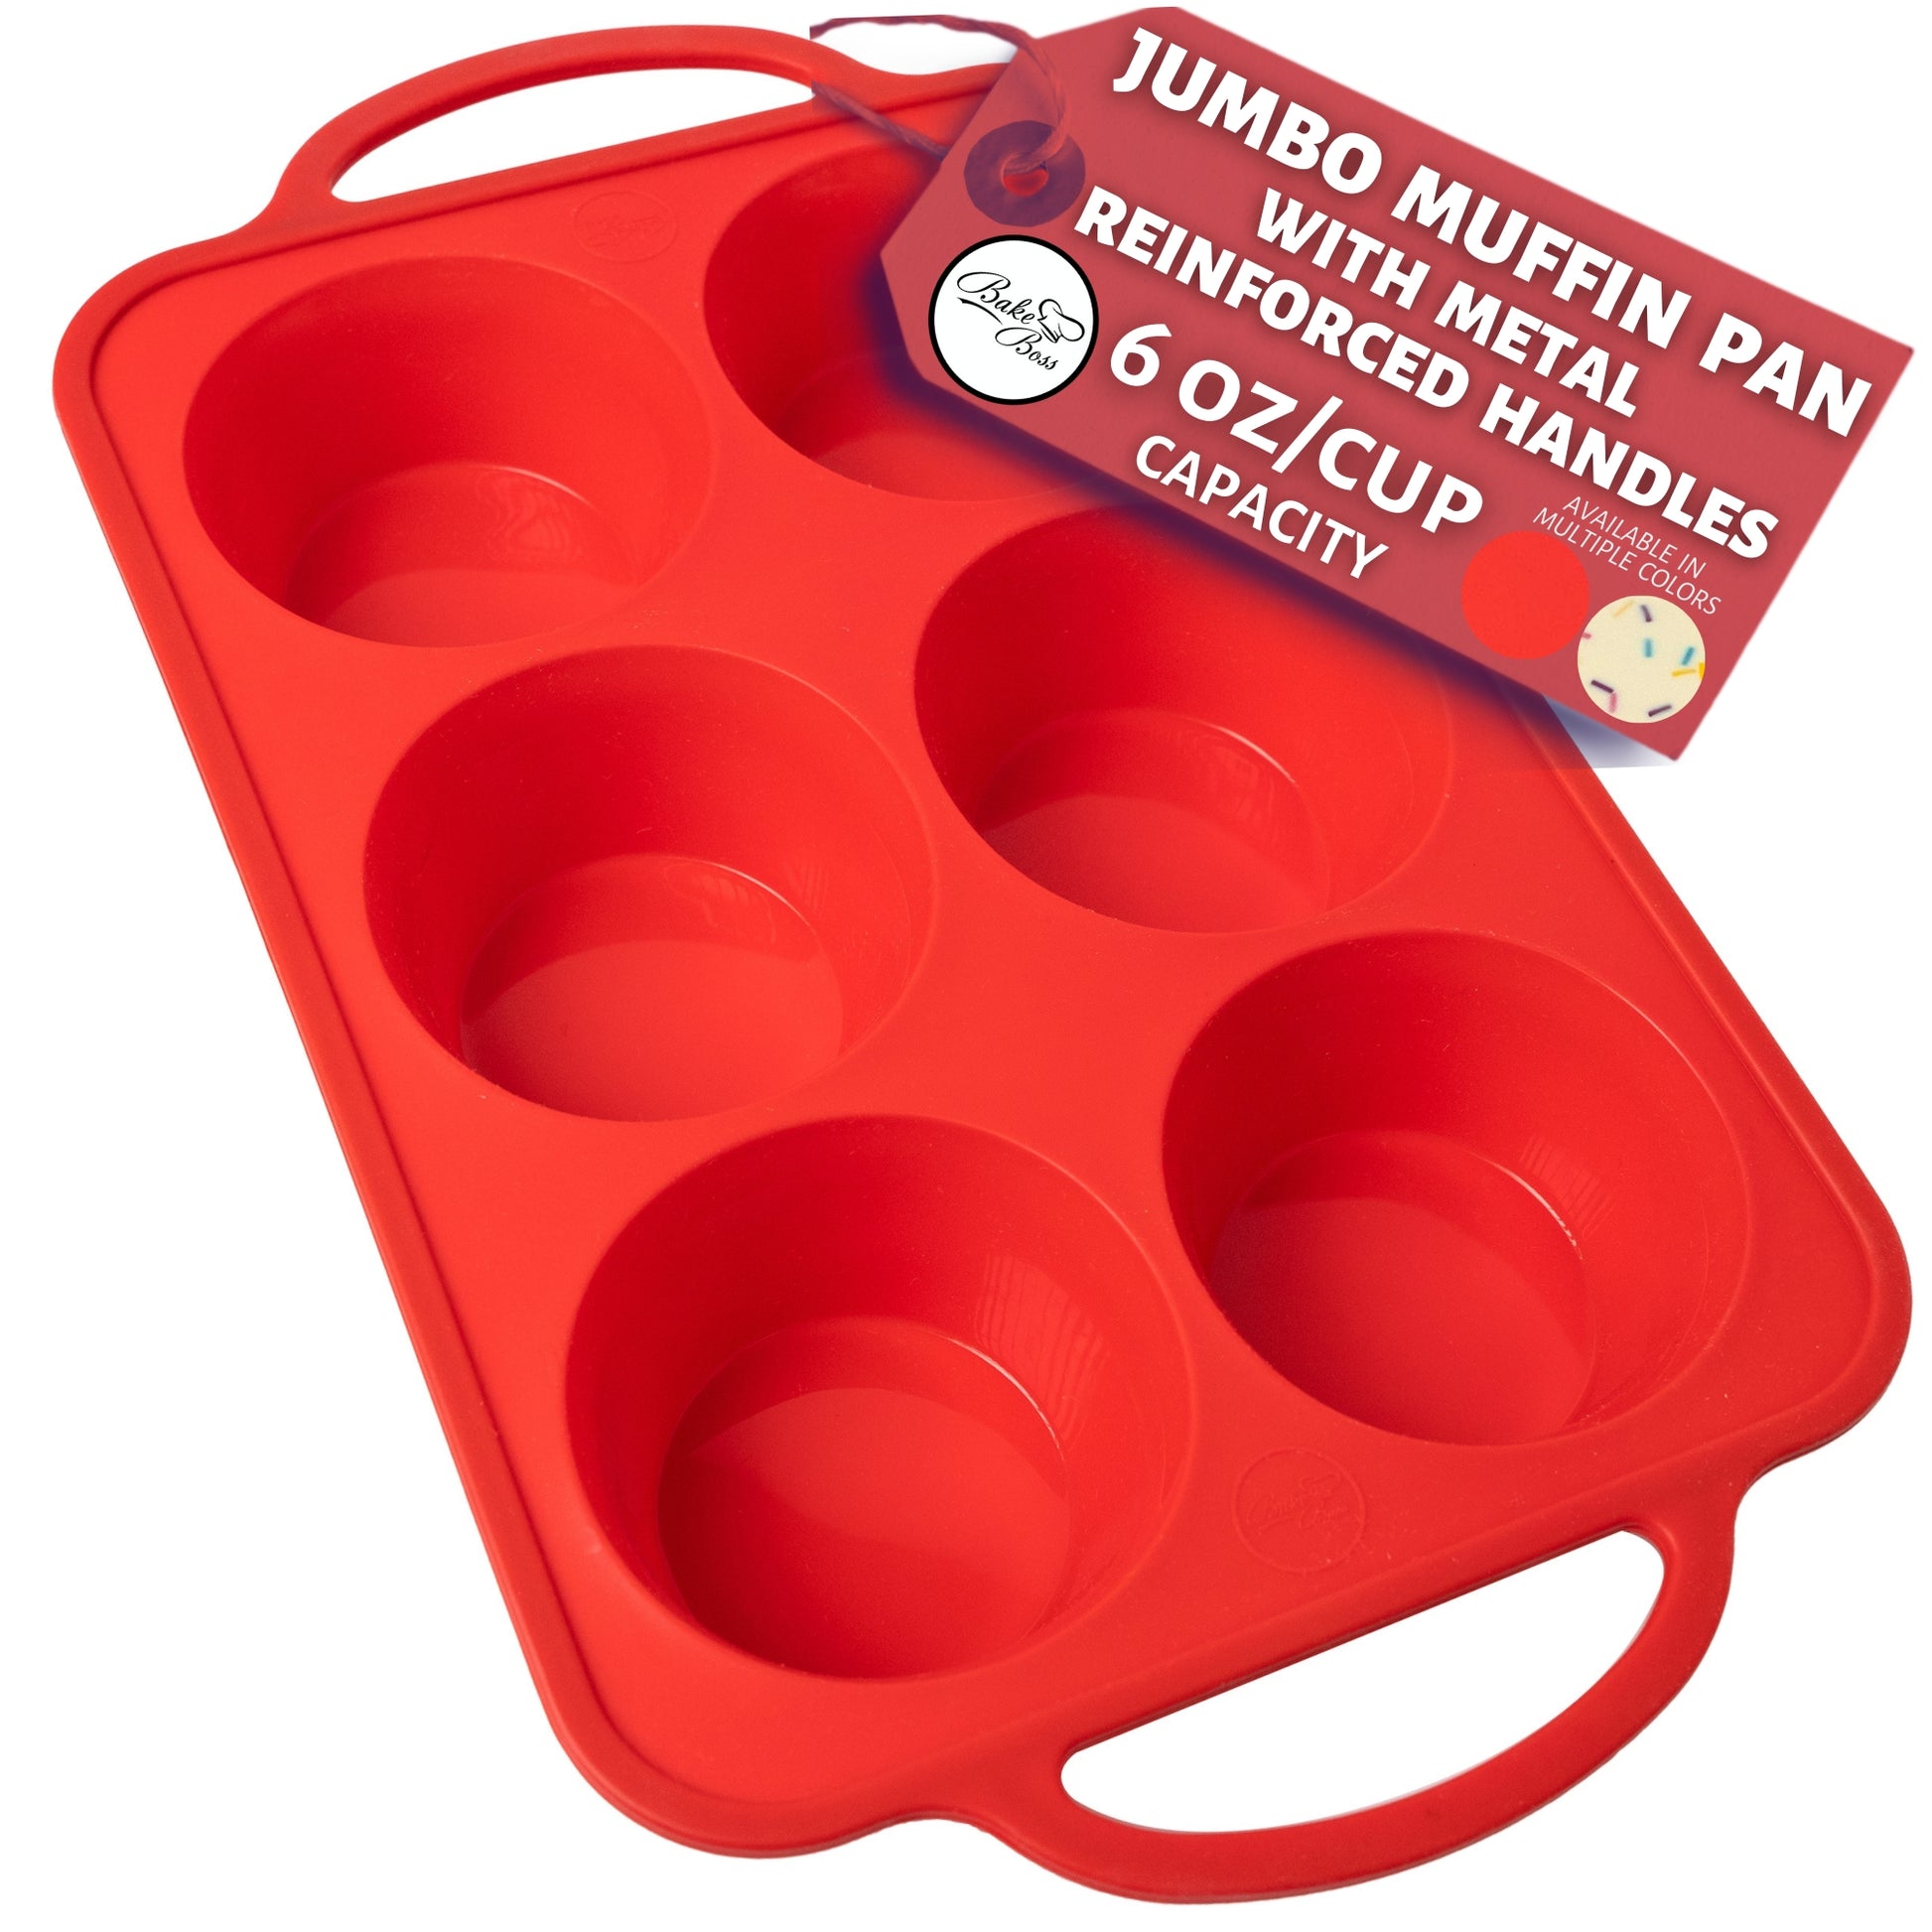 Texas Muffin Pan, 6 Cup, Nonstick - USA Pan